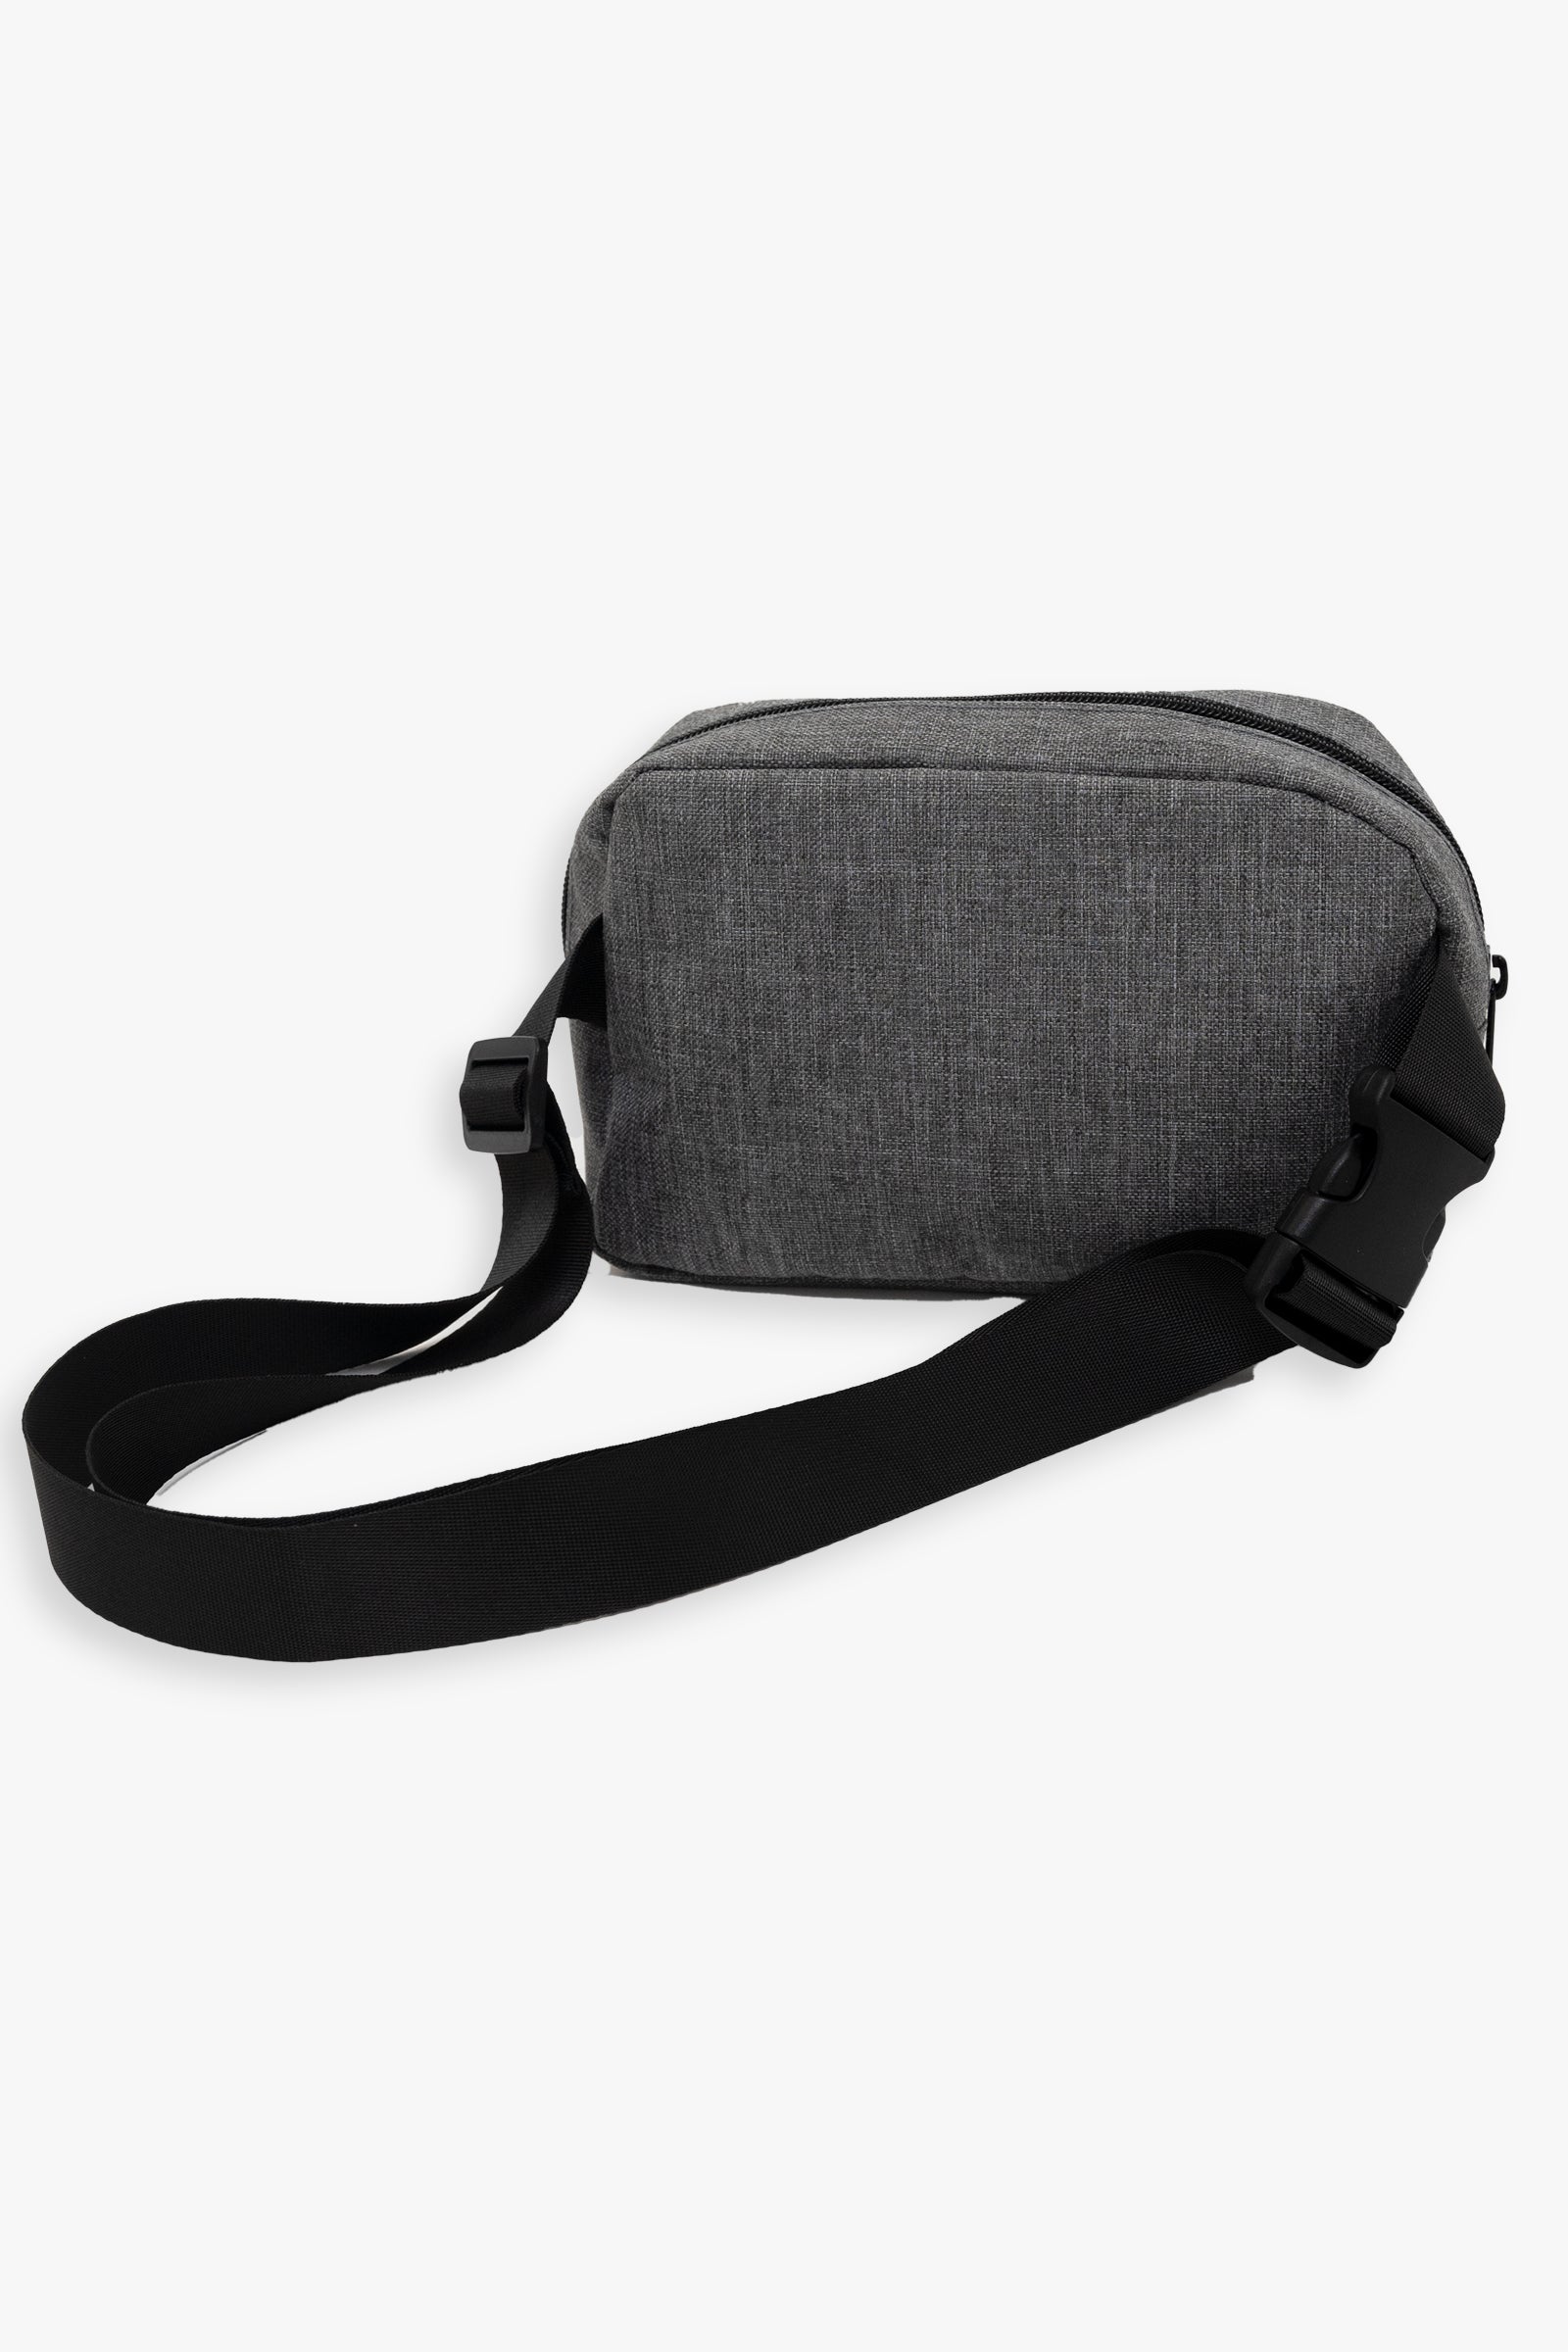 Gertex Customizable Grey Belt Bag